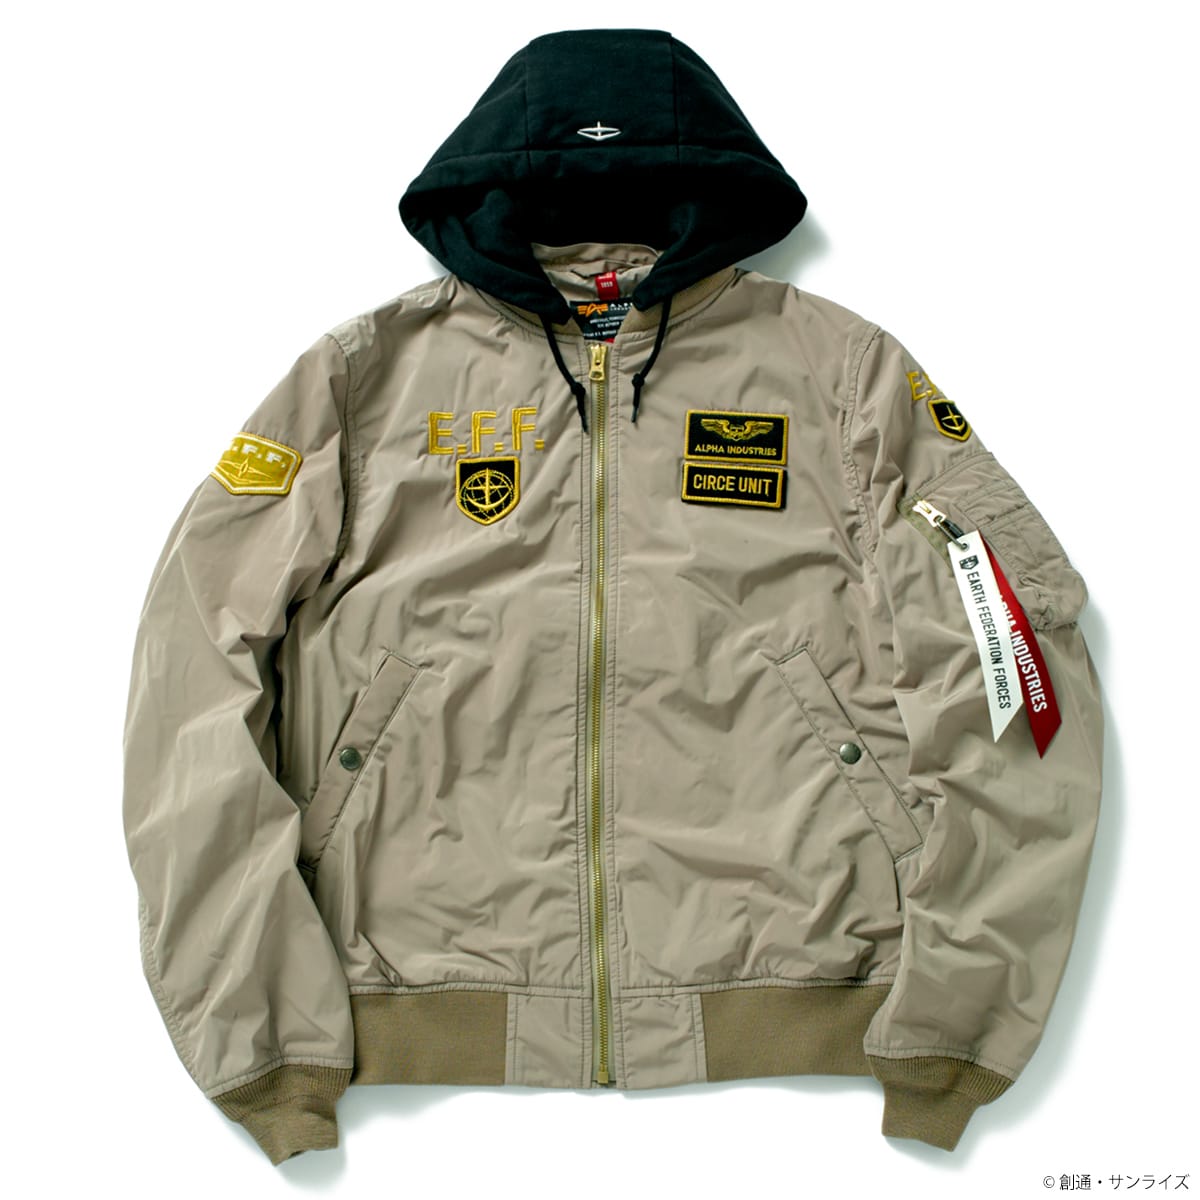 eff jacket 2